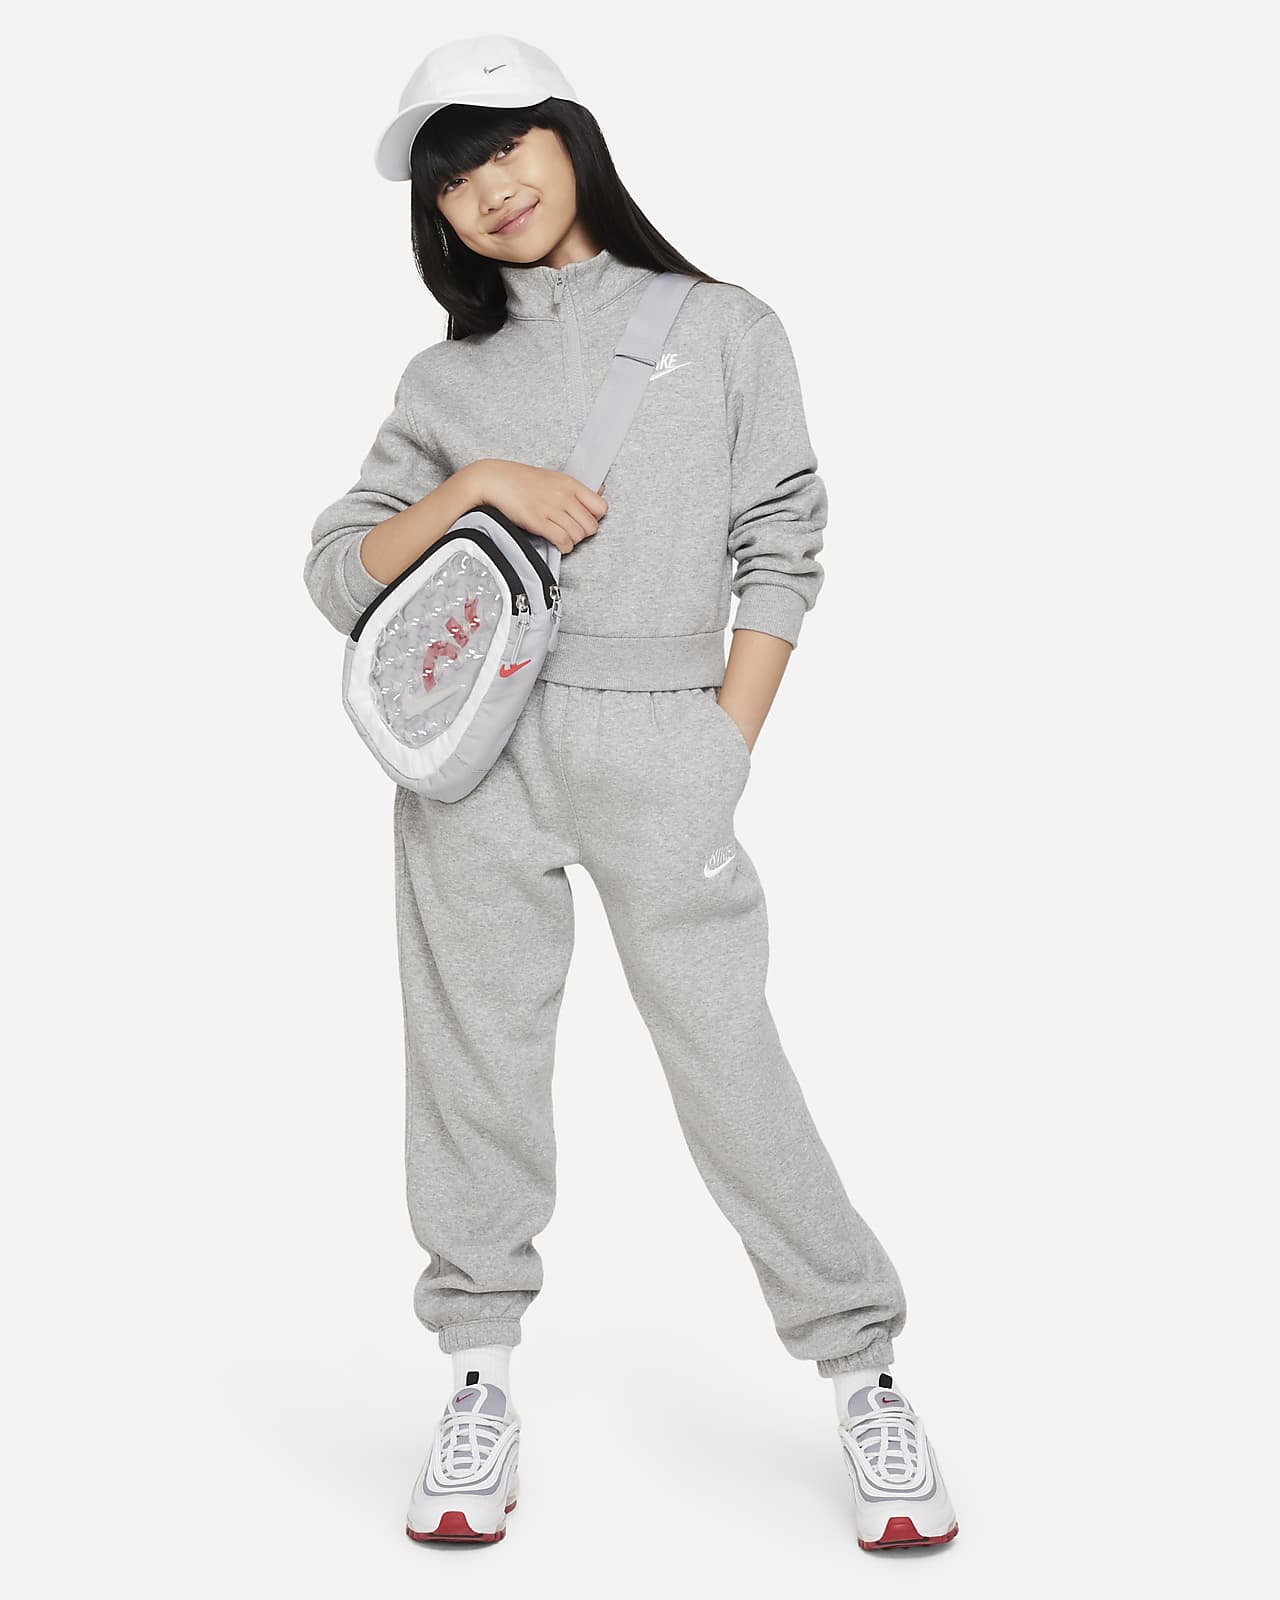 Nike Sportswear Club Big Kids\' Fleece Nike Top. (Girls\') Long-Sleeve 1/2-Zip